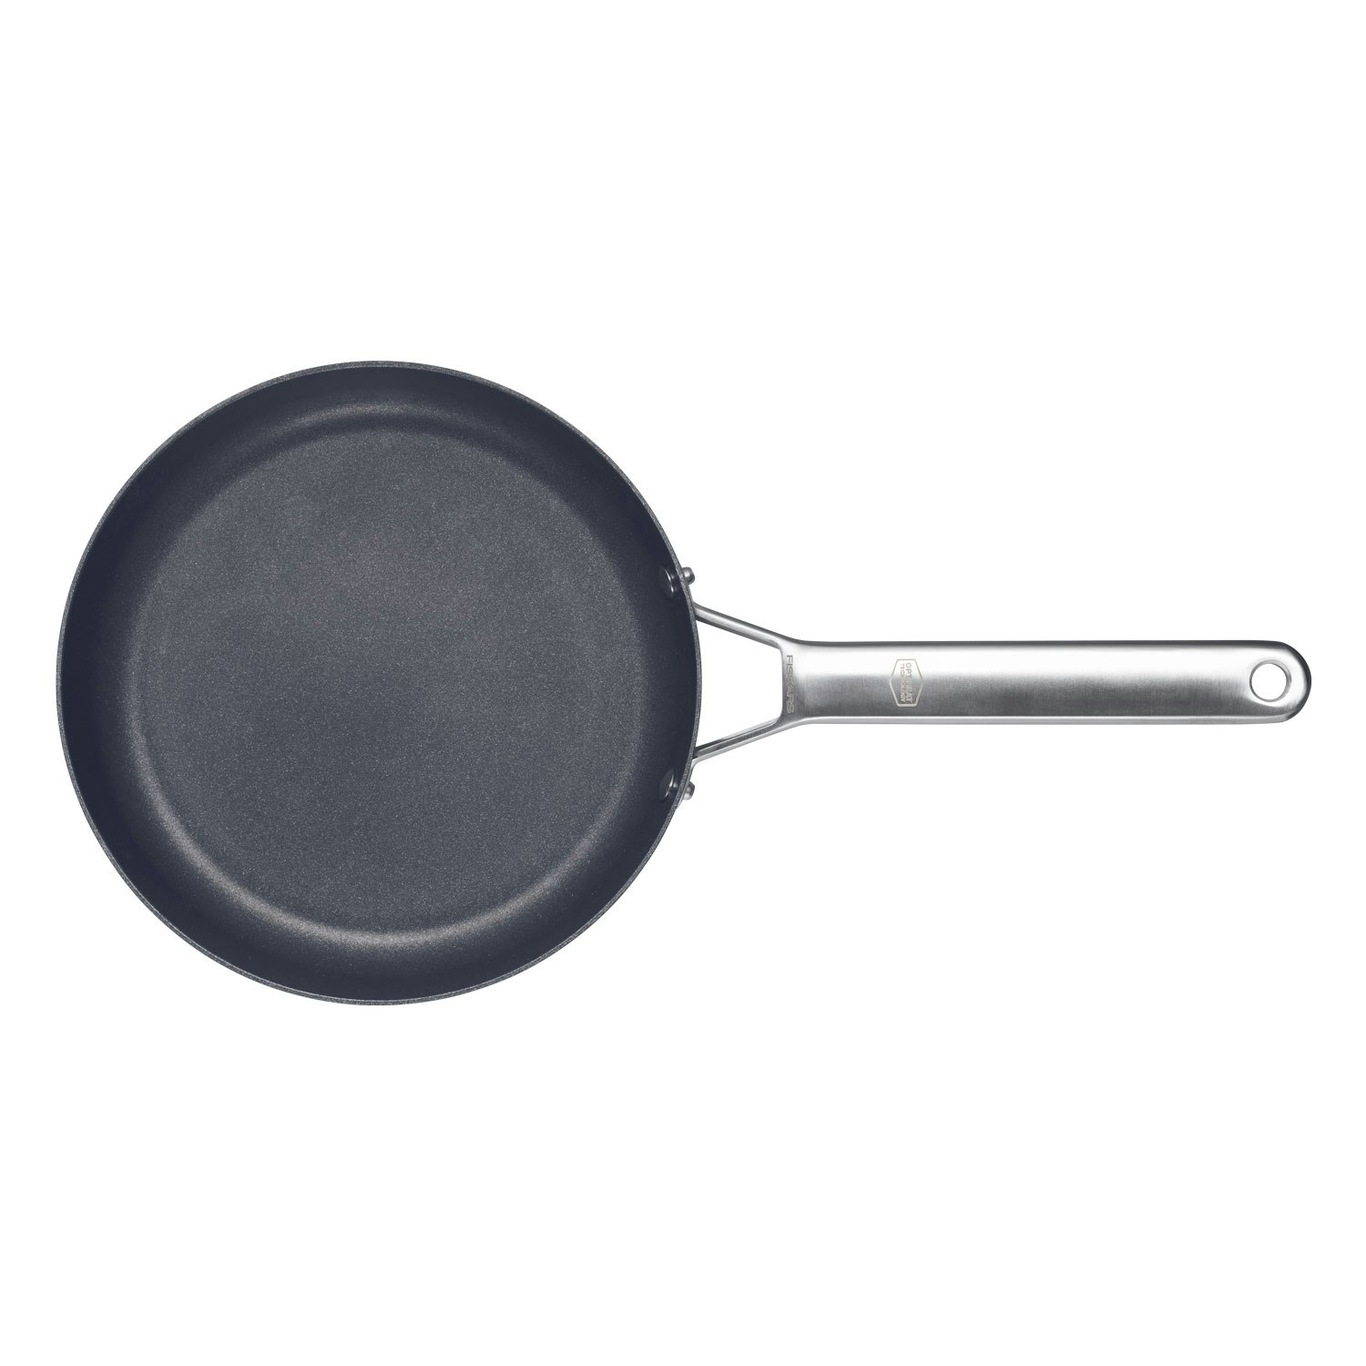 Taiten Frying Pan, 24 cm